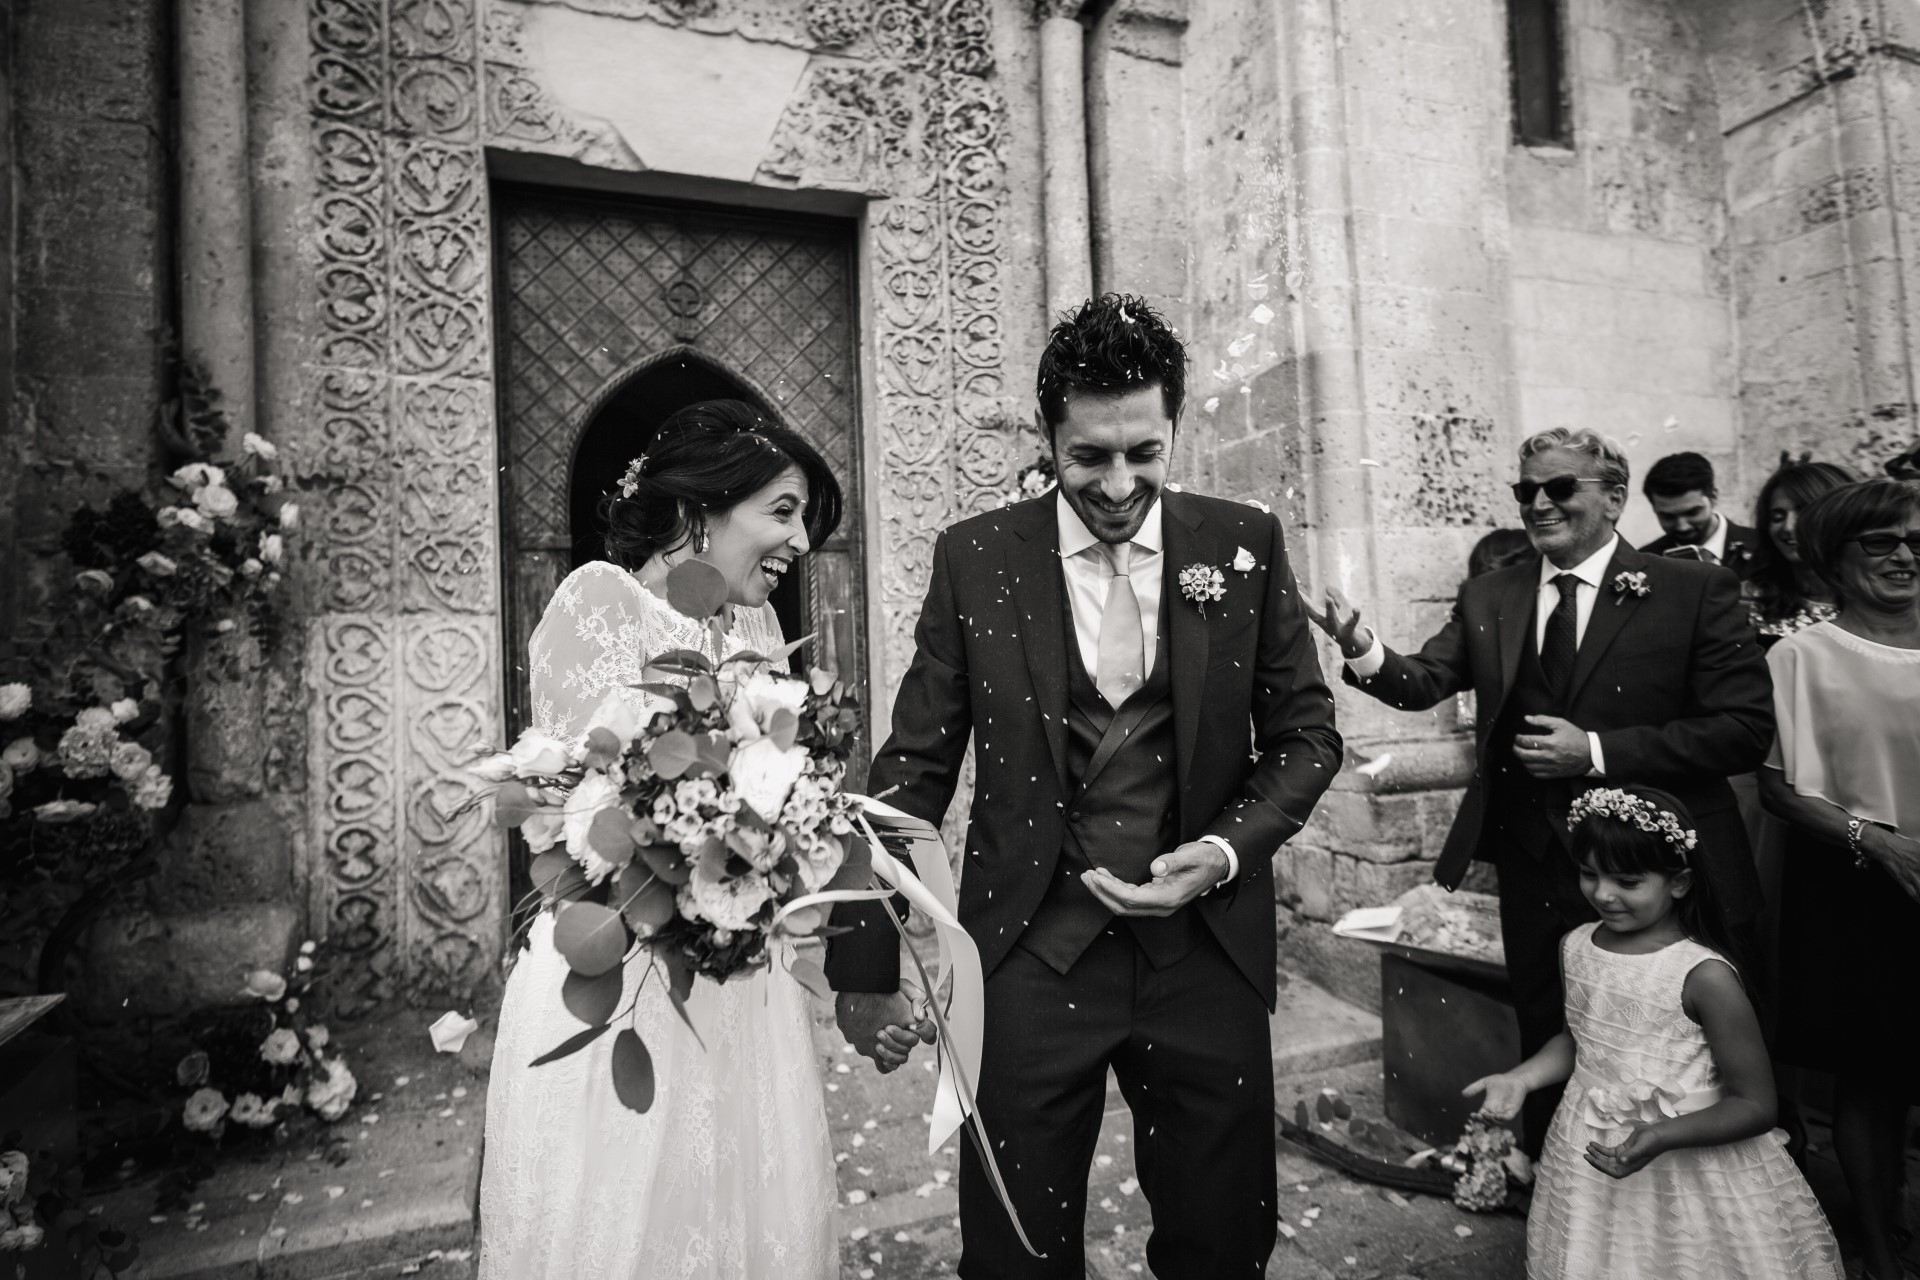 Vale&Ale fotografo matrimonio destination wedding photographer videographer luxury reportage italia italy como lake amalfi coast apulia rome roma sicily masseria potenti tuscany milan